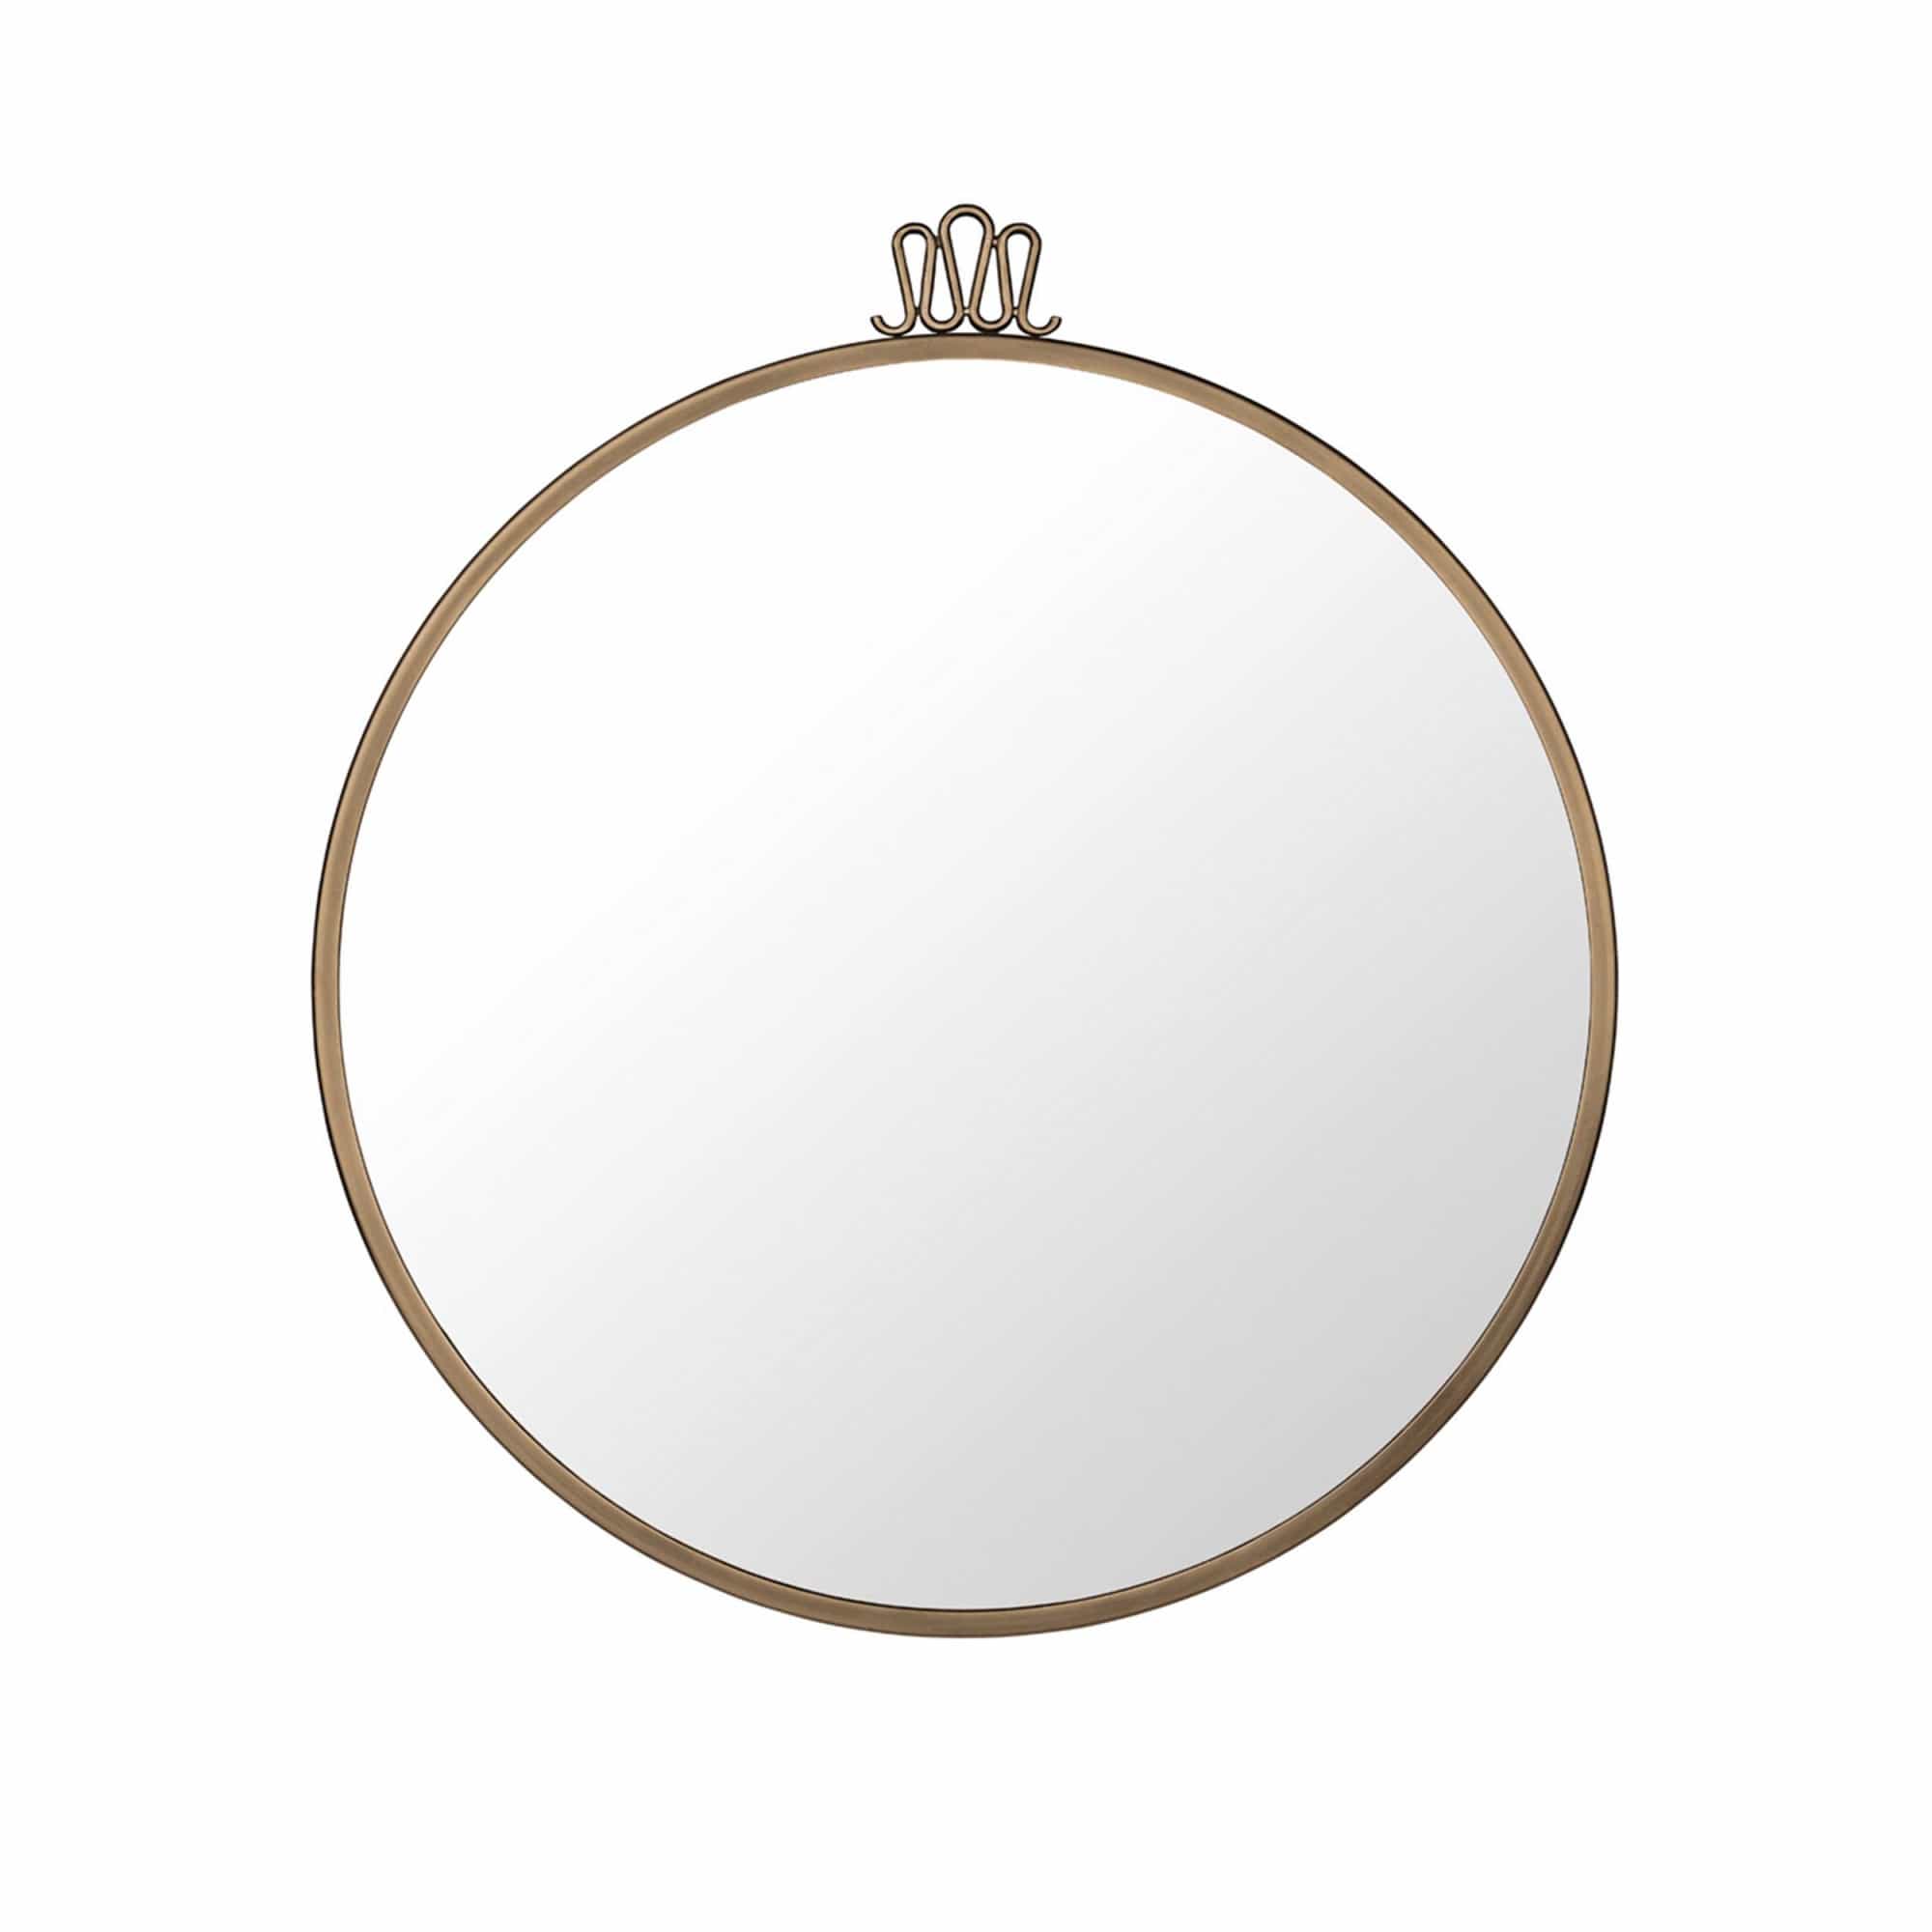 Randaccio Wall Mirror Spegel